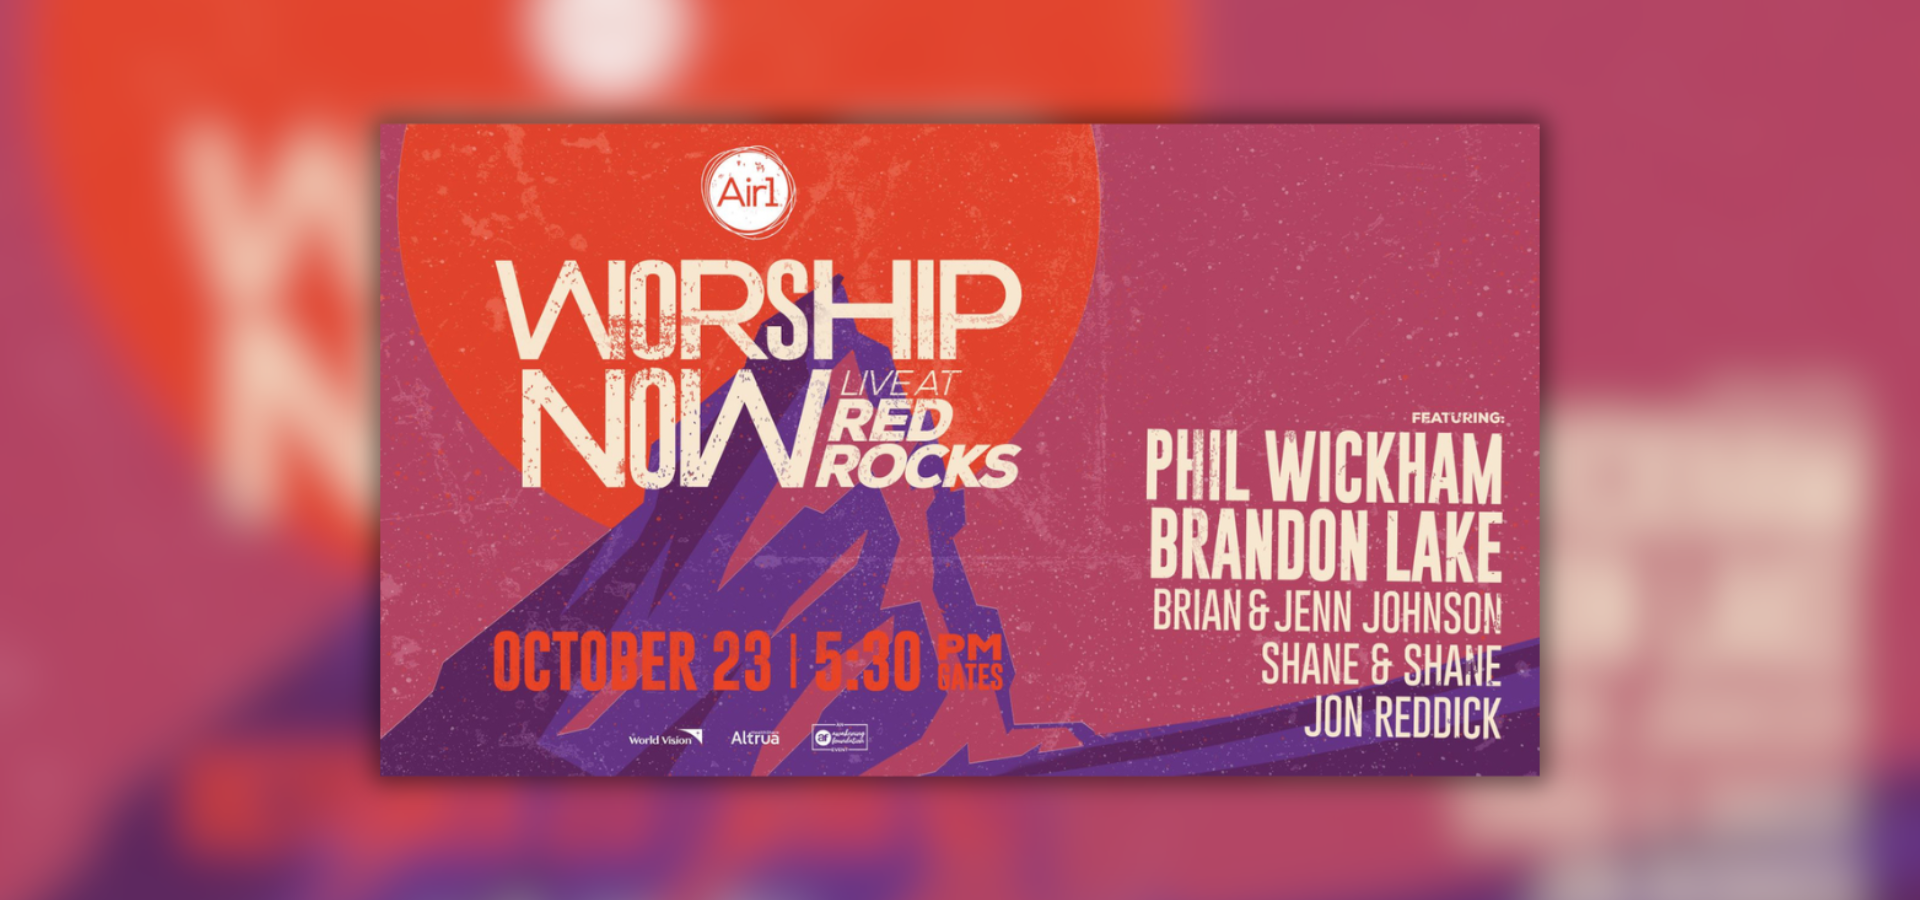 Air1 Worship Now At Red Rocks with Phil Wickham & Brandon Lake